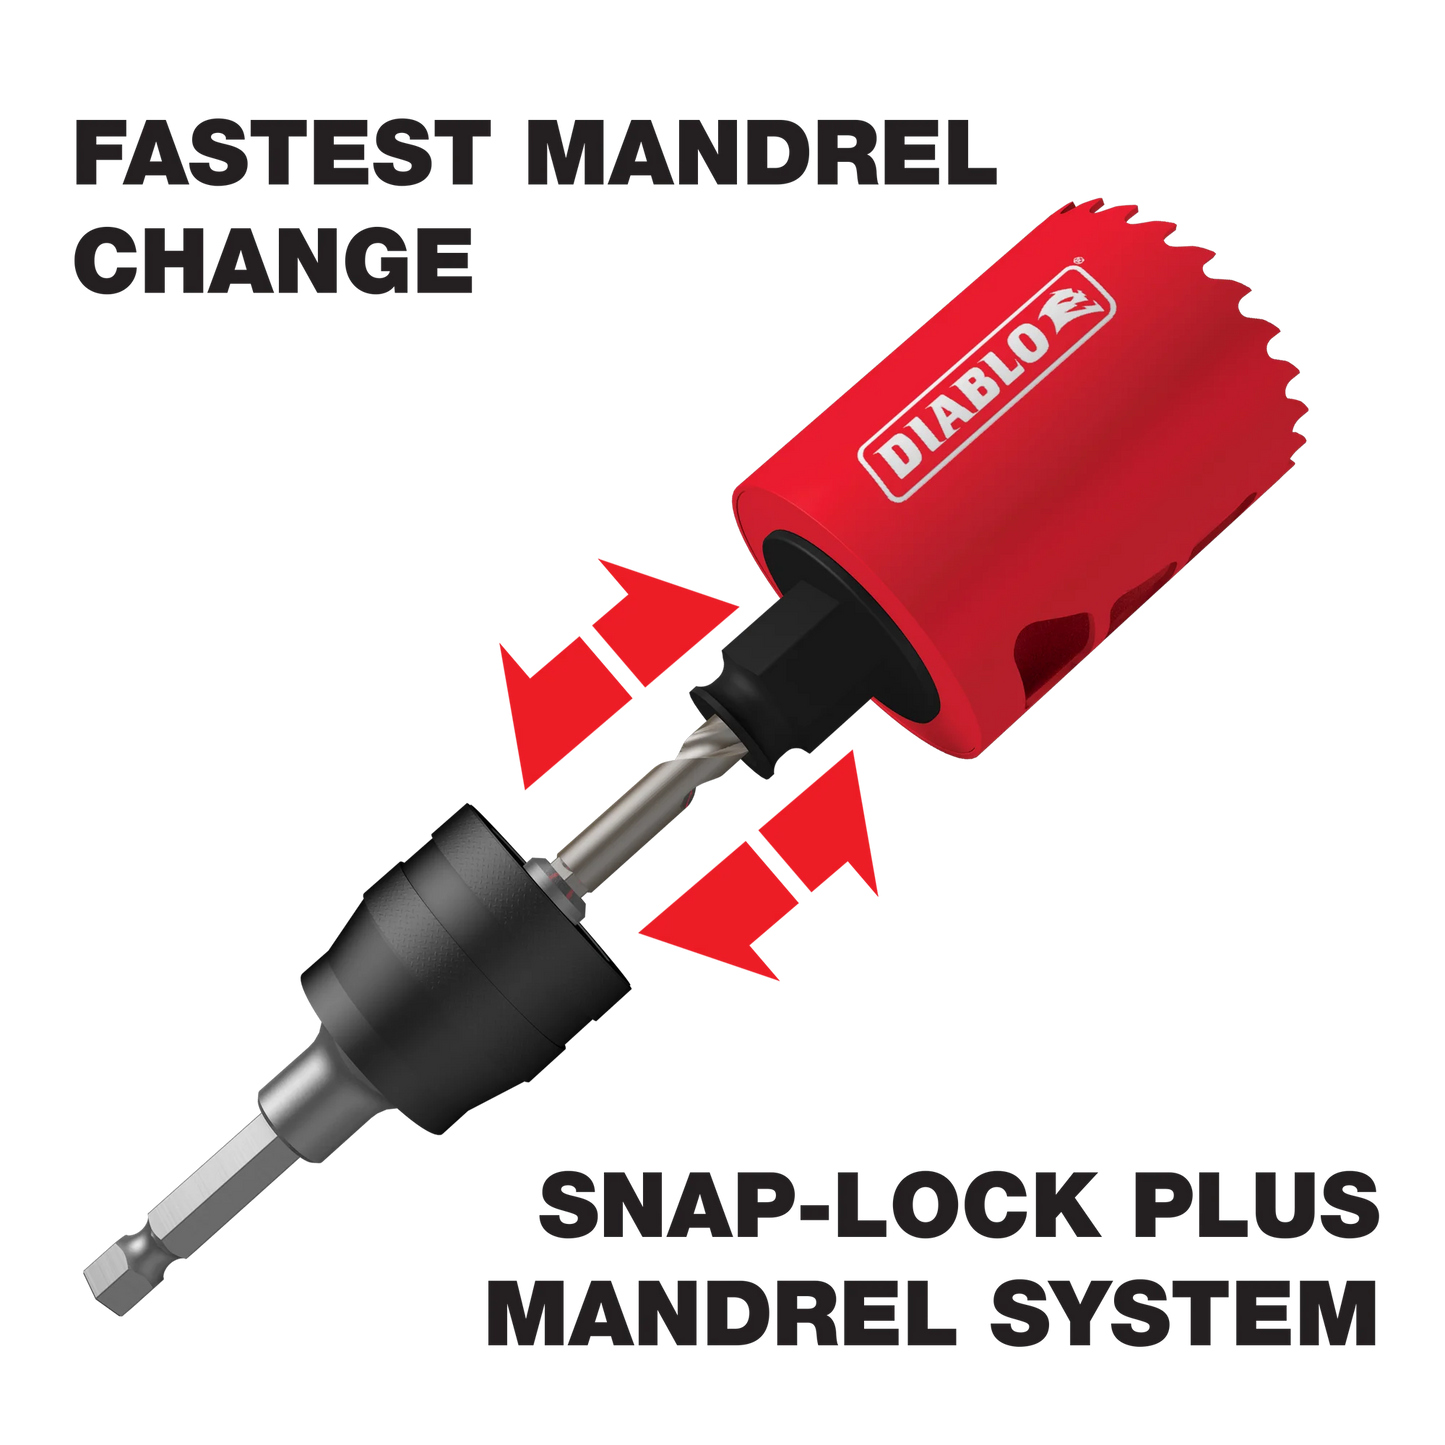 DIABLO 3/8 in. Snap‑Lock Plus™ Mandrel System